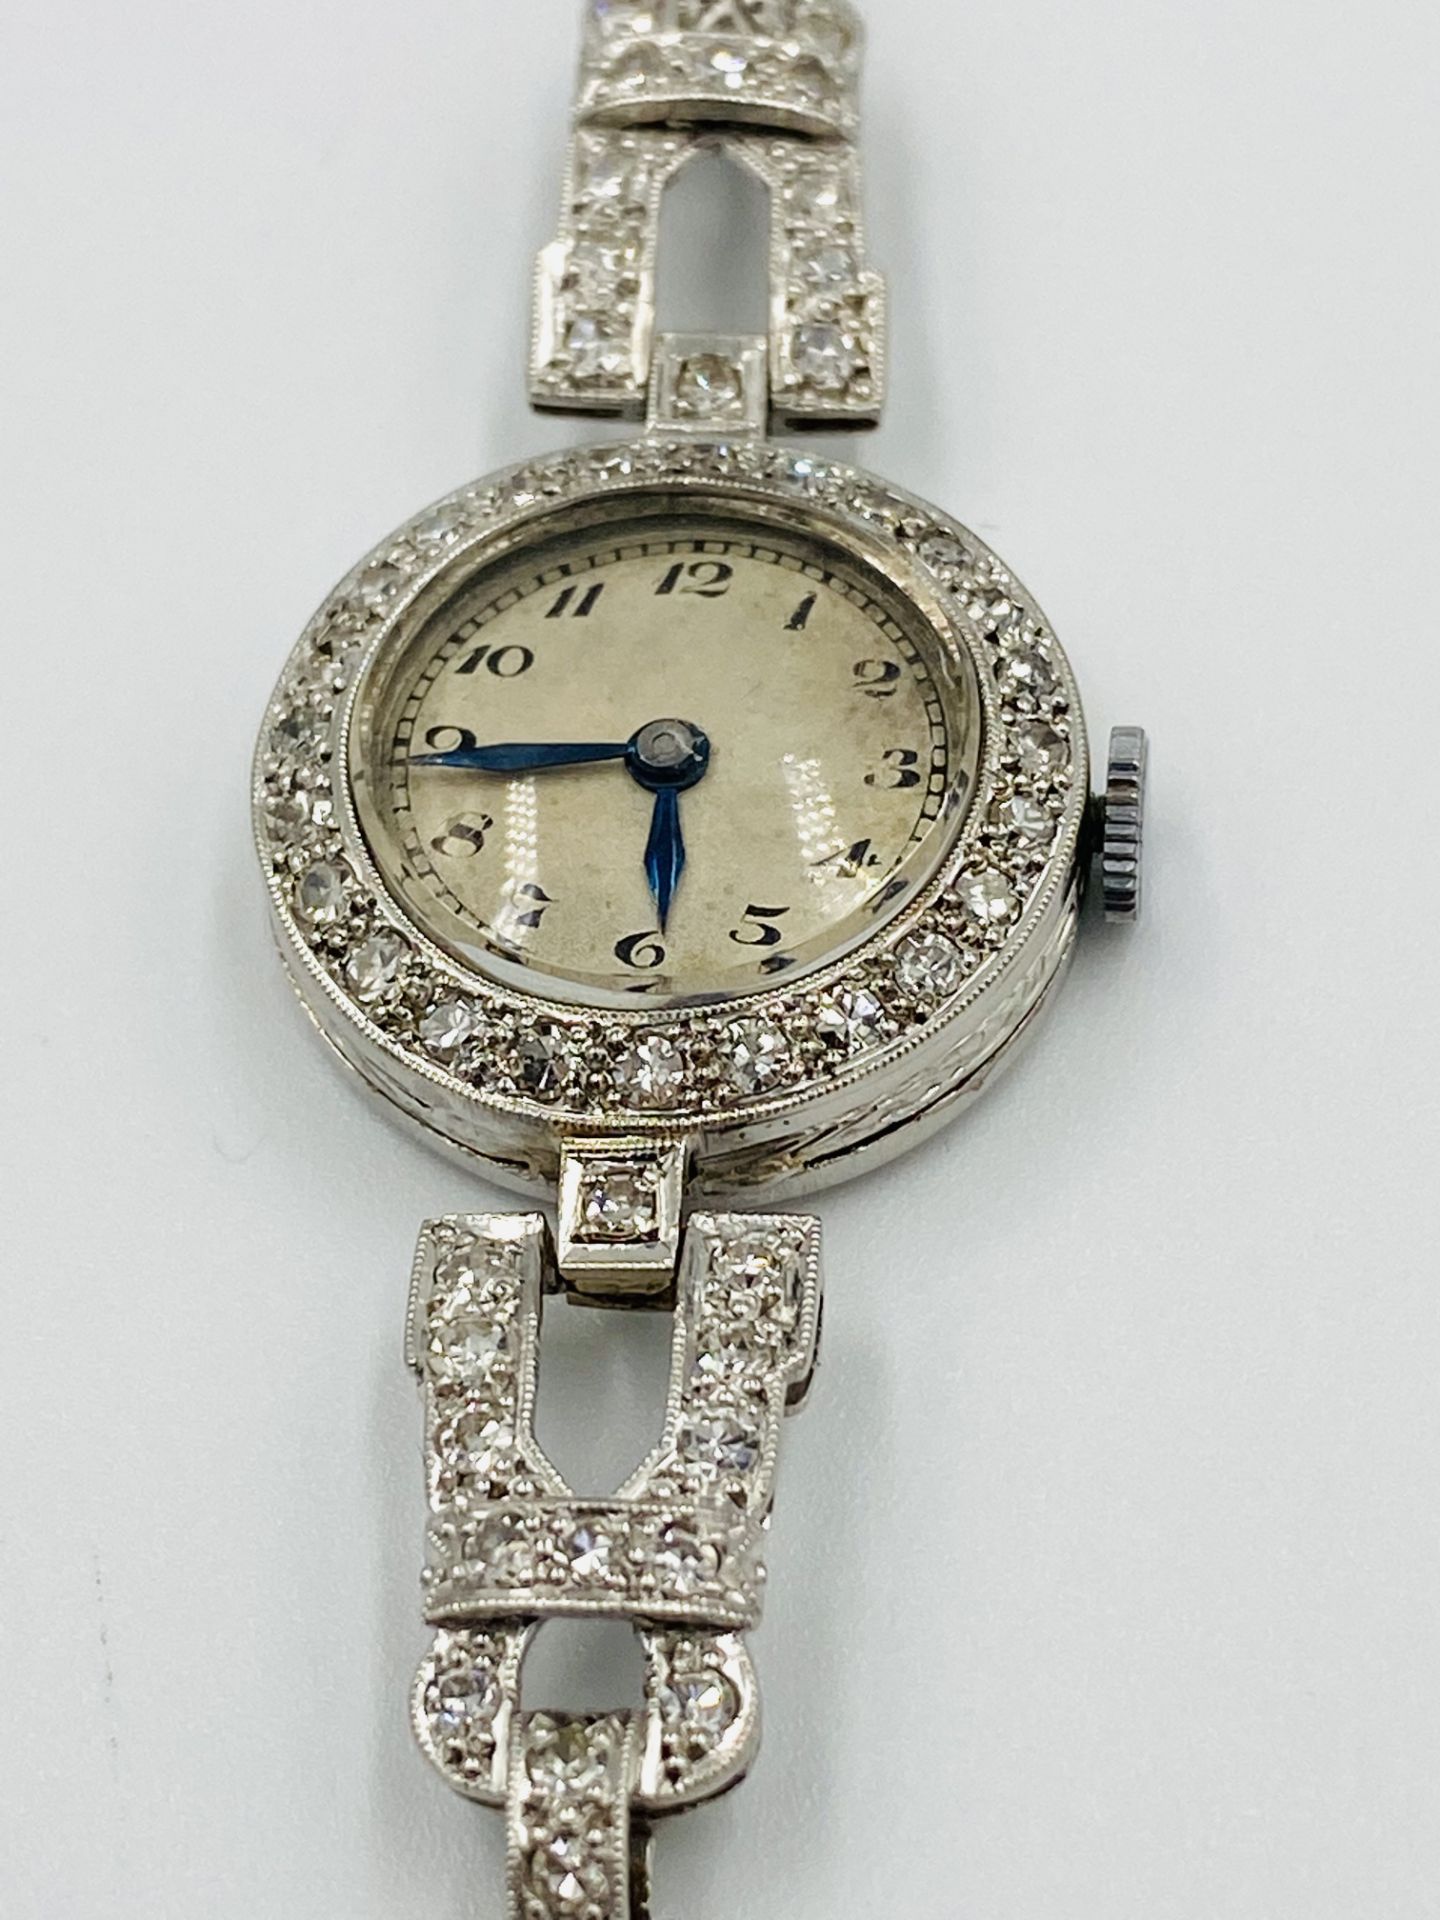 Platinum and diamond cocktail watch - Image 3 of 5